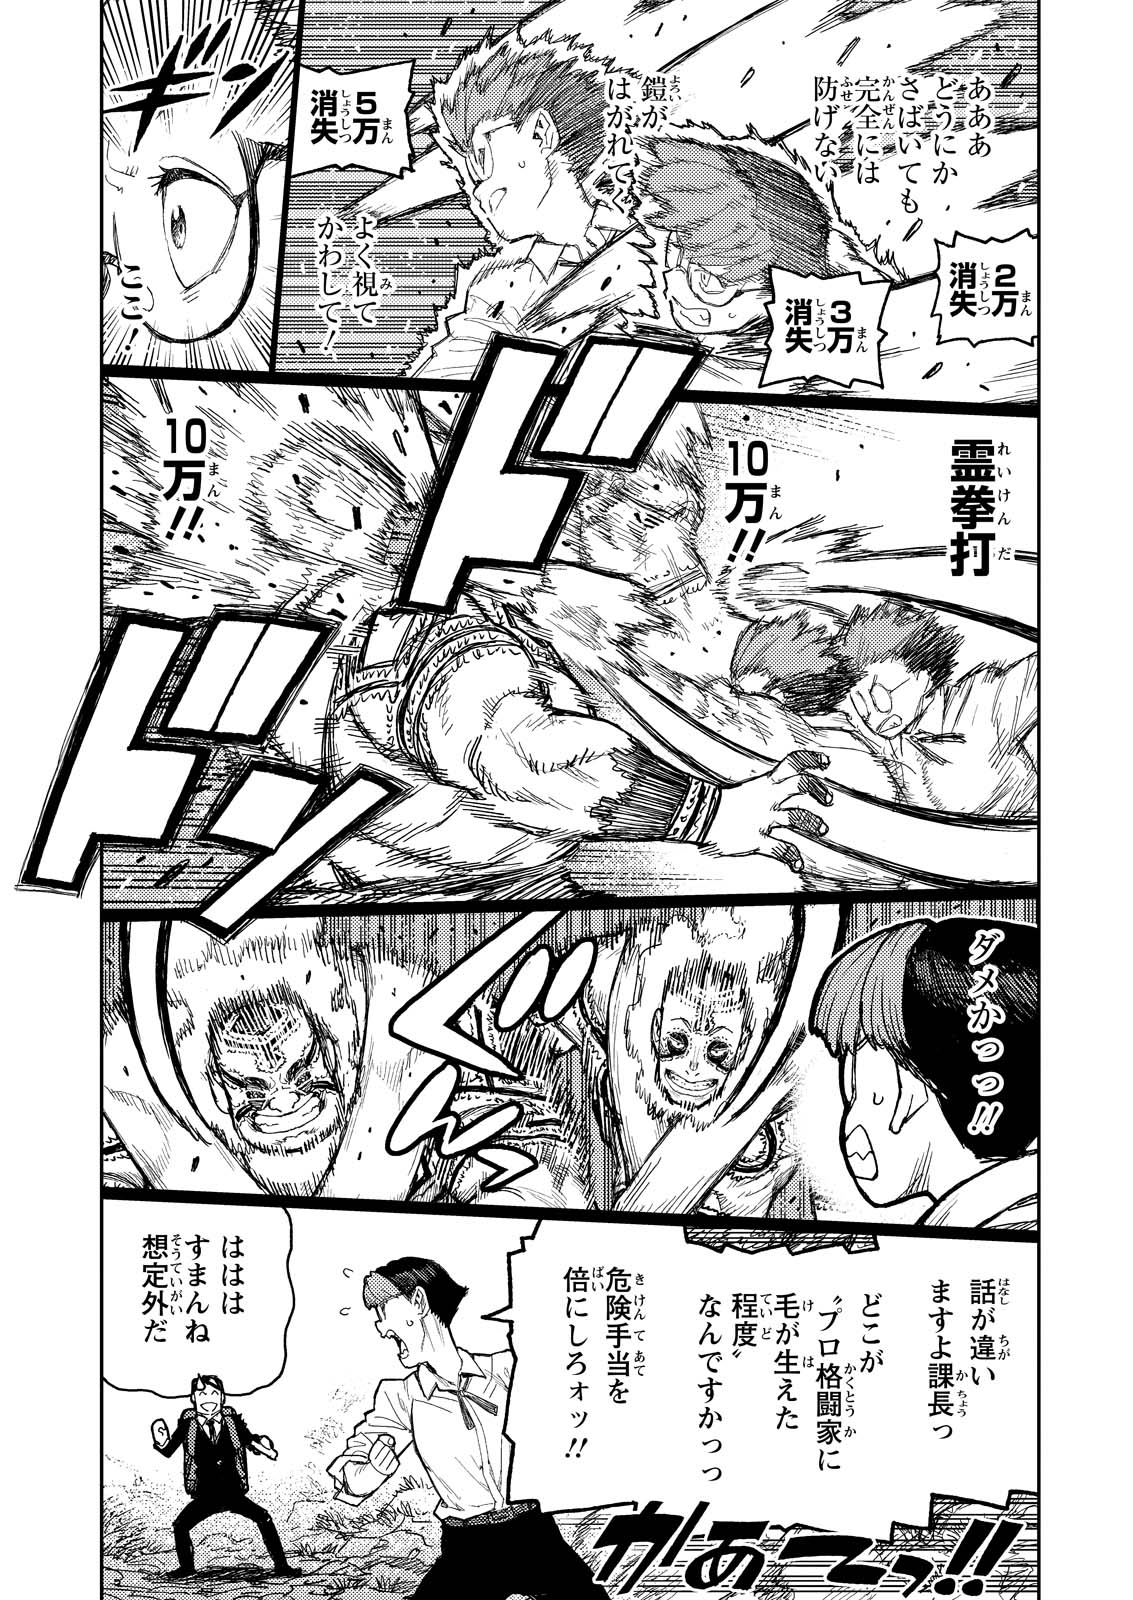 Tsugumomo - Chapter 166 - Page 17